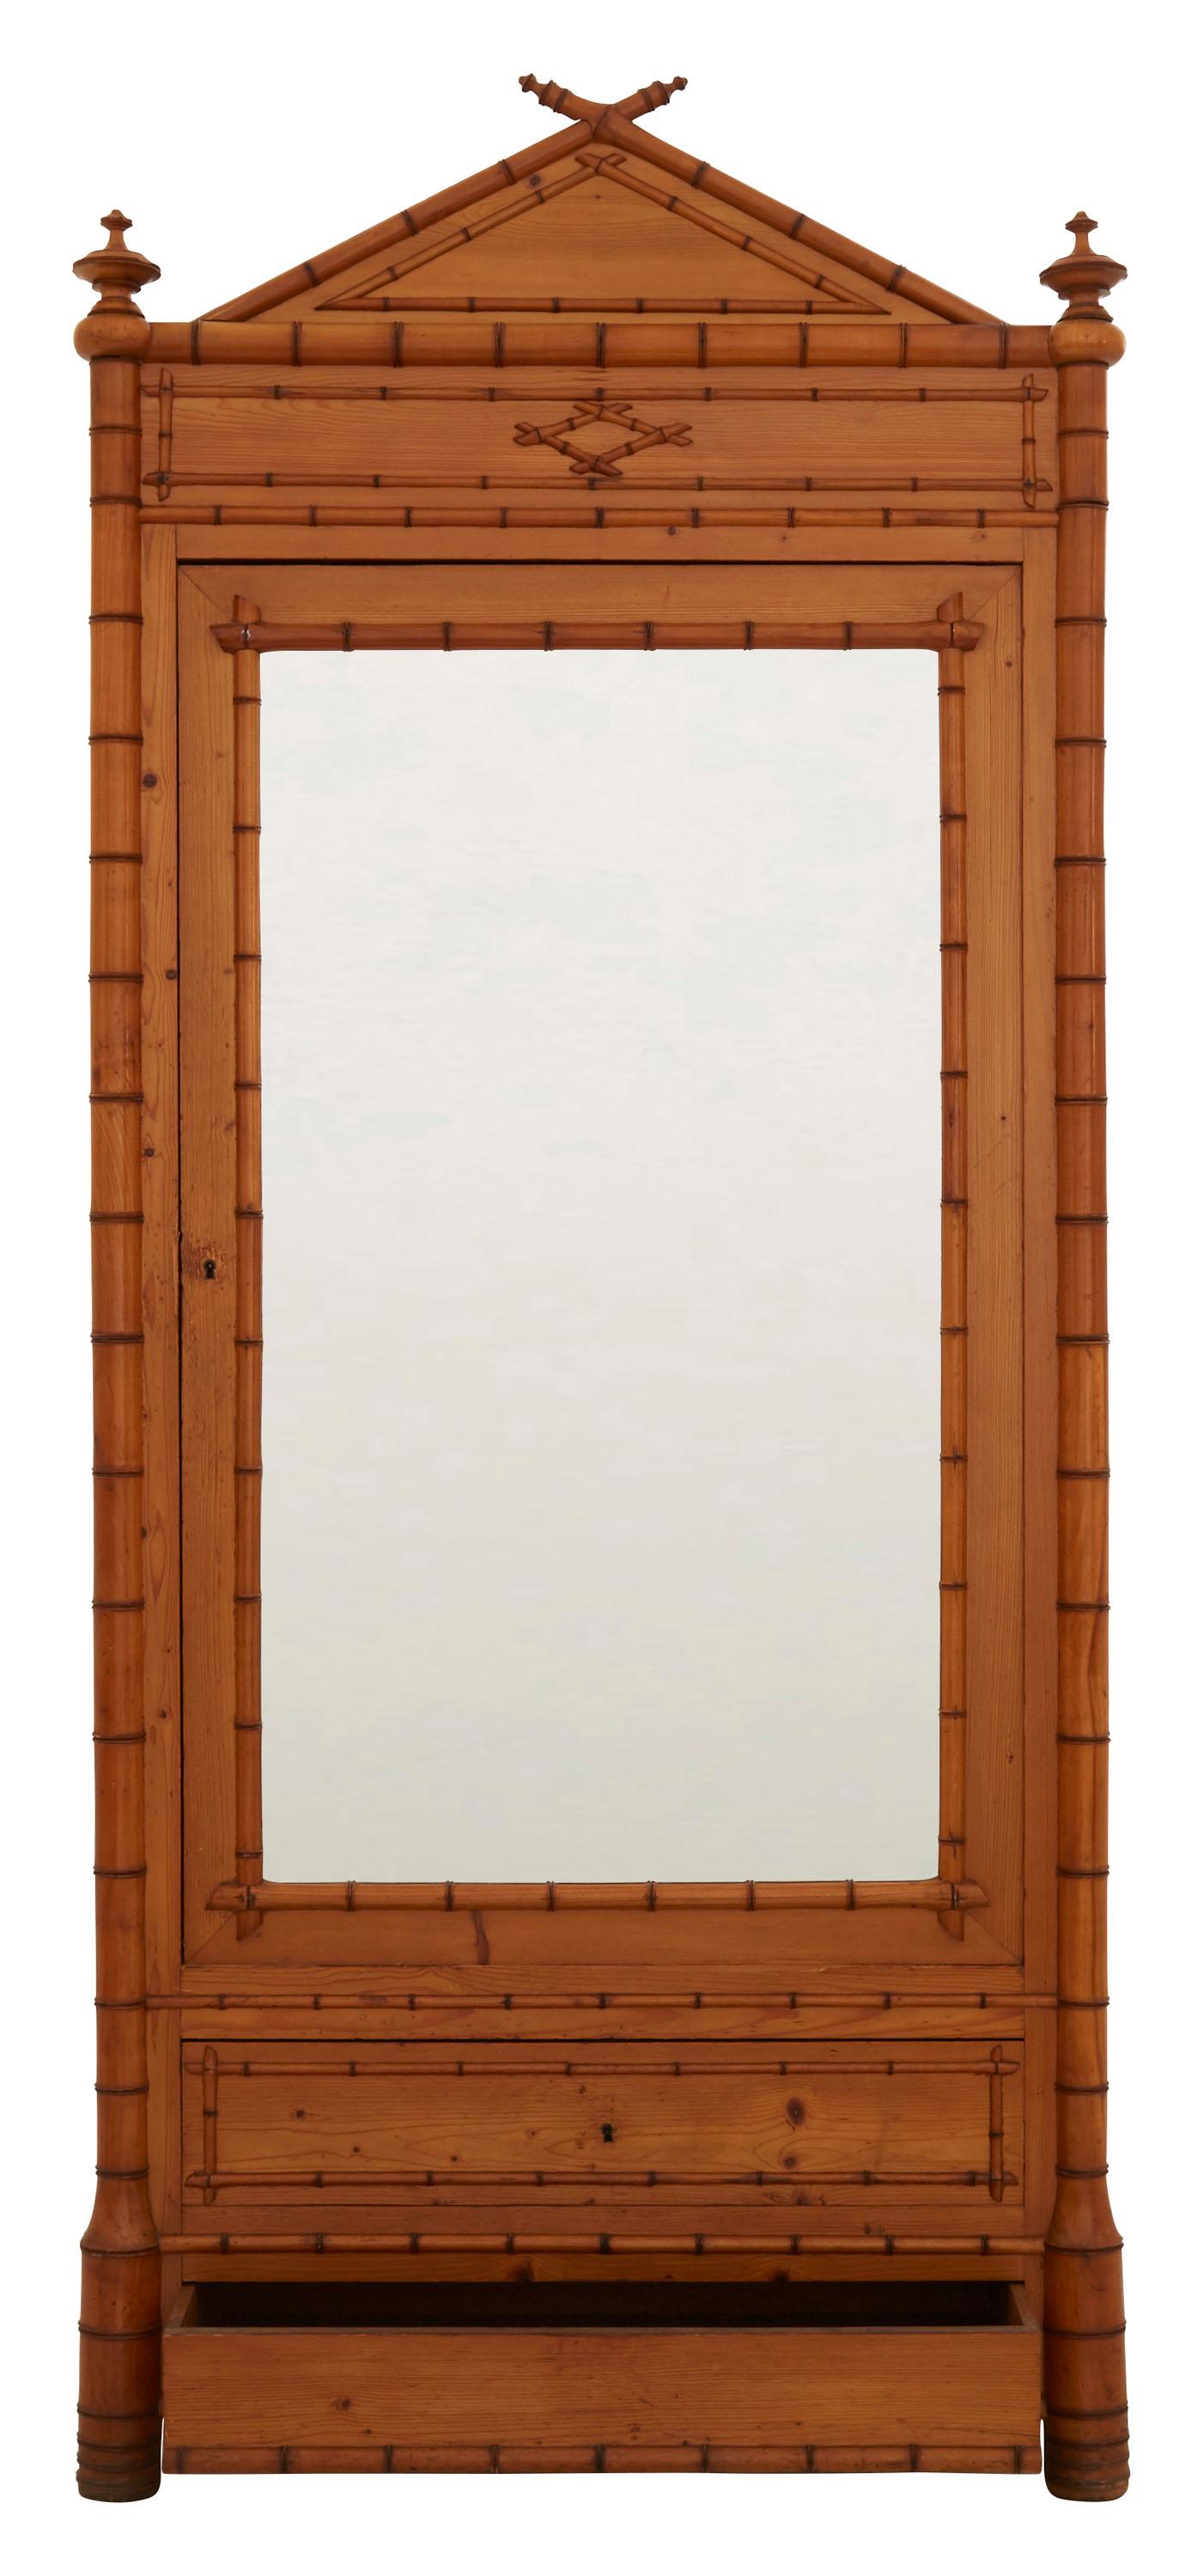 • Original mirror
• Wood faux bamboo
• Early 20th century
• Paris
• Measures: 39.5